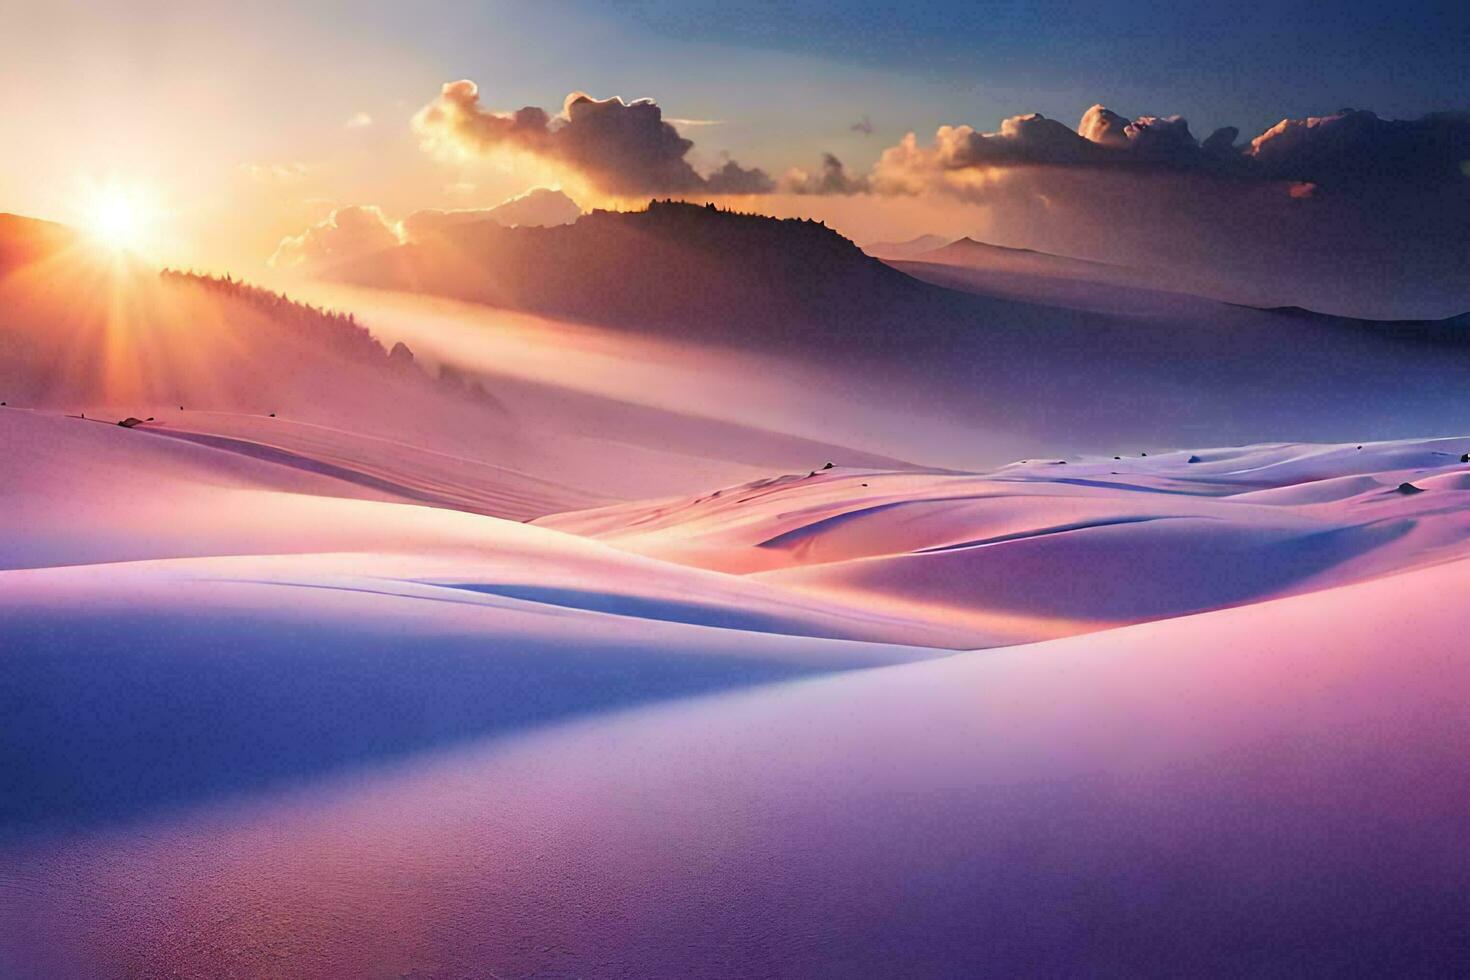 sunrise over the sand dunes, mountains, mountains, mountains, mountains, mountains, mountains. AI-Generated photo